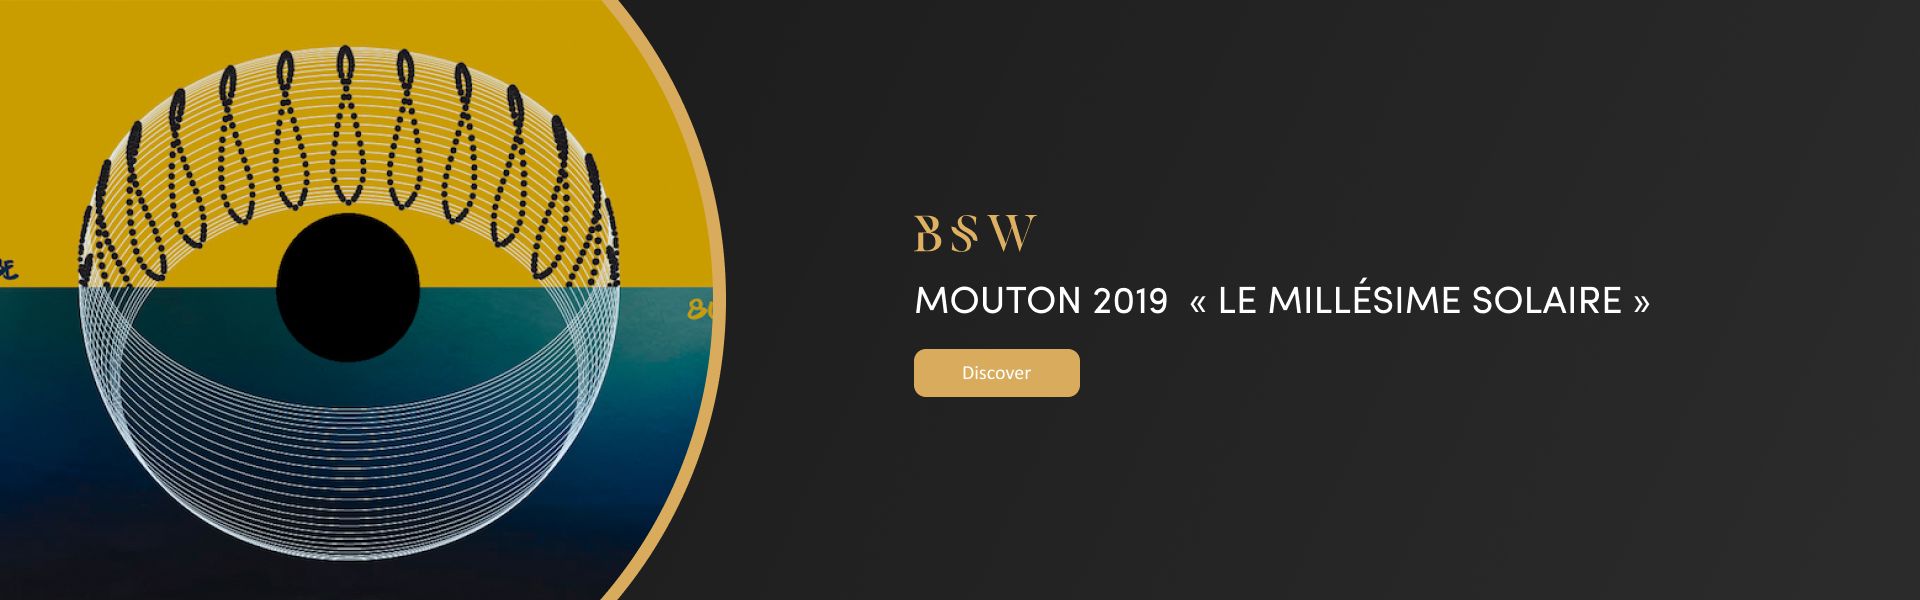 slider Mouton 2019